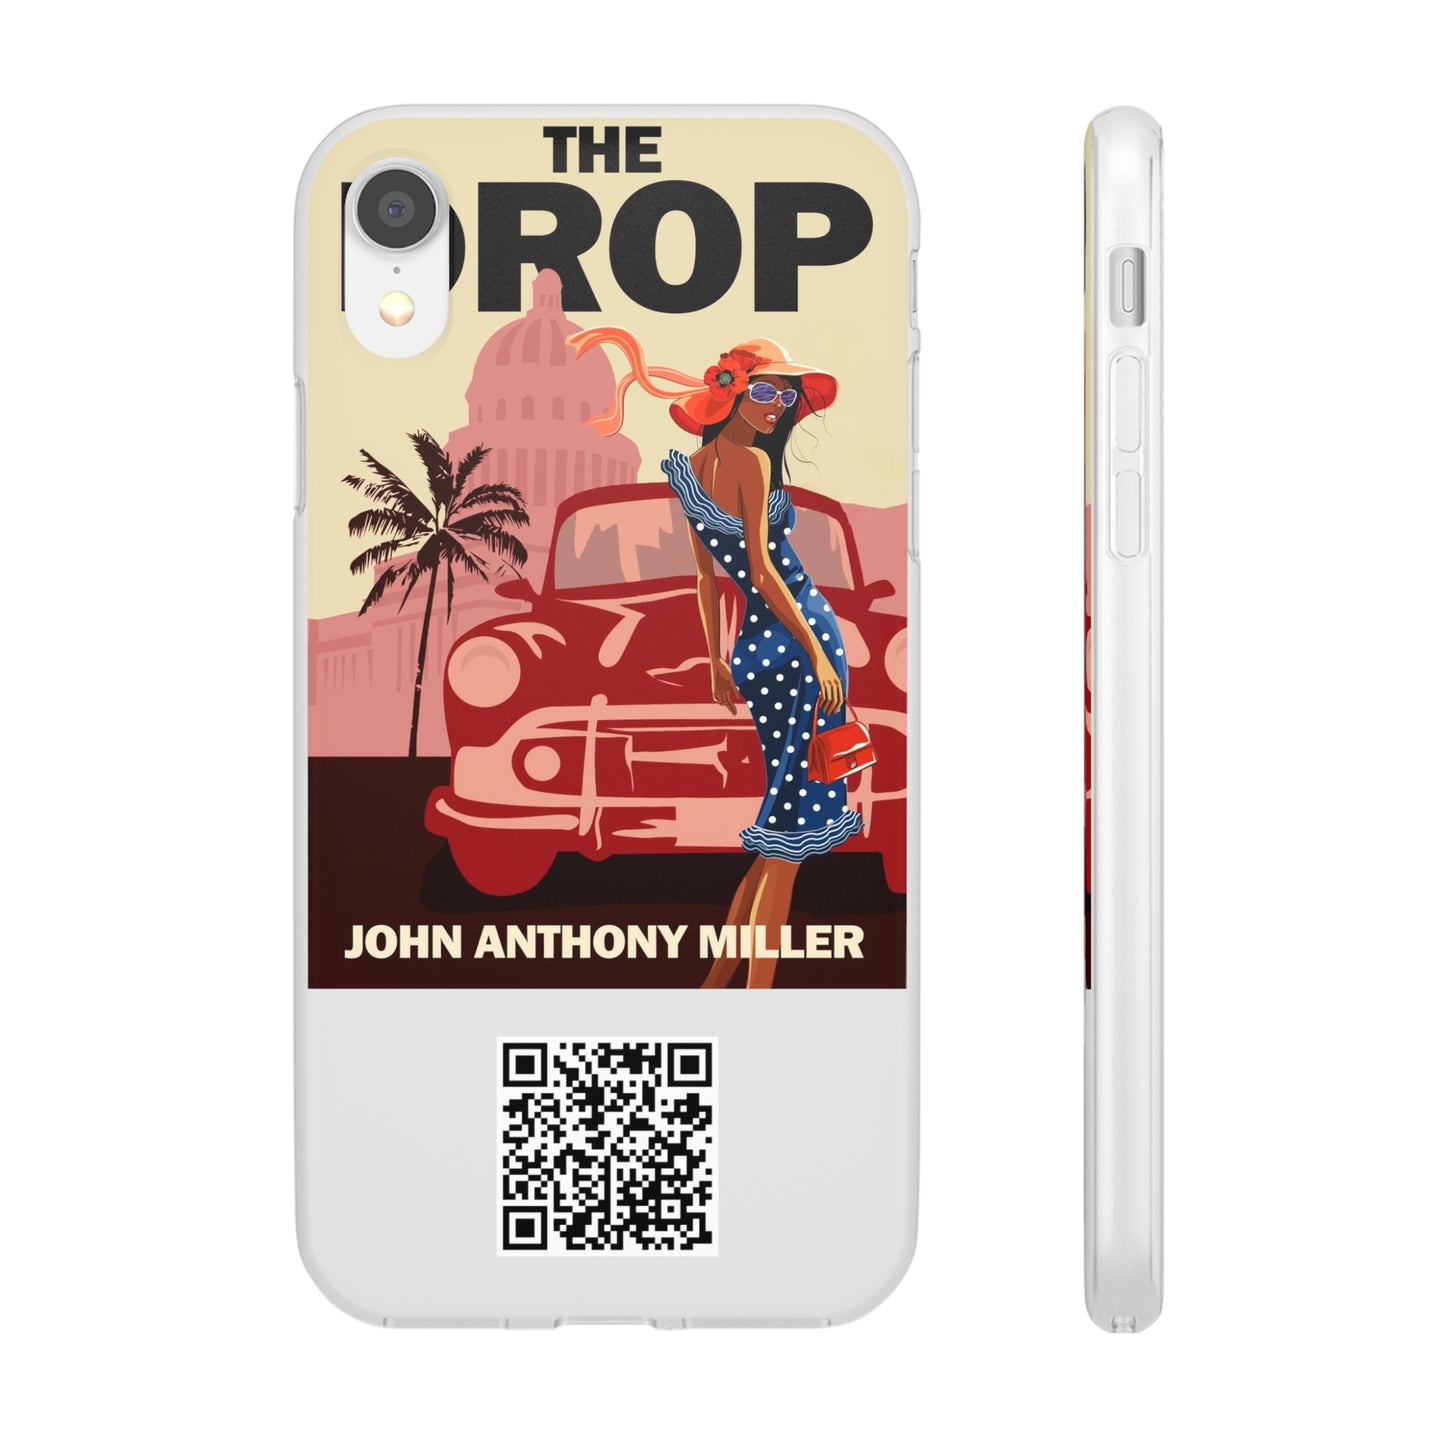 The Drop - Flexible Phone Case